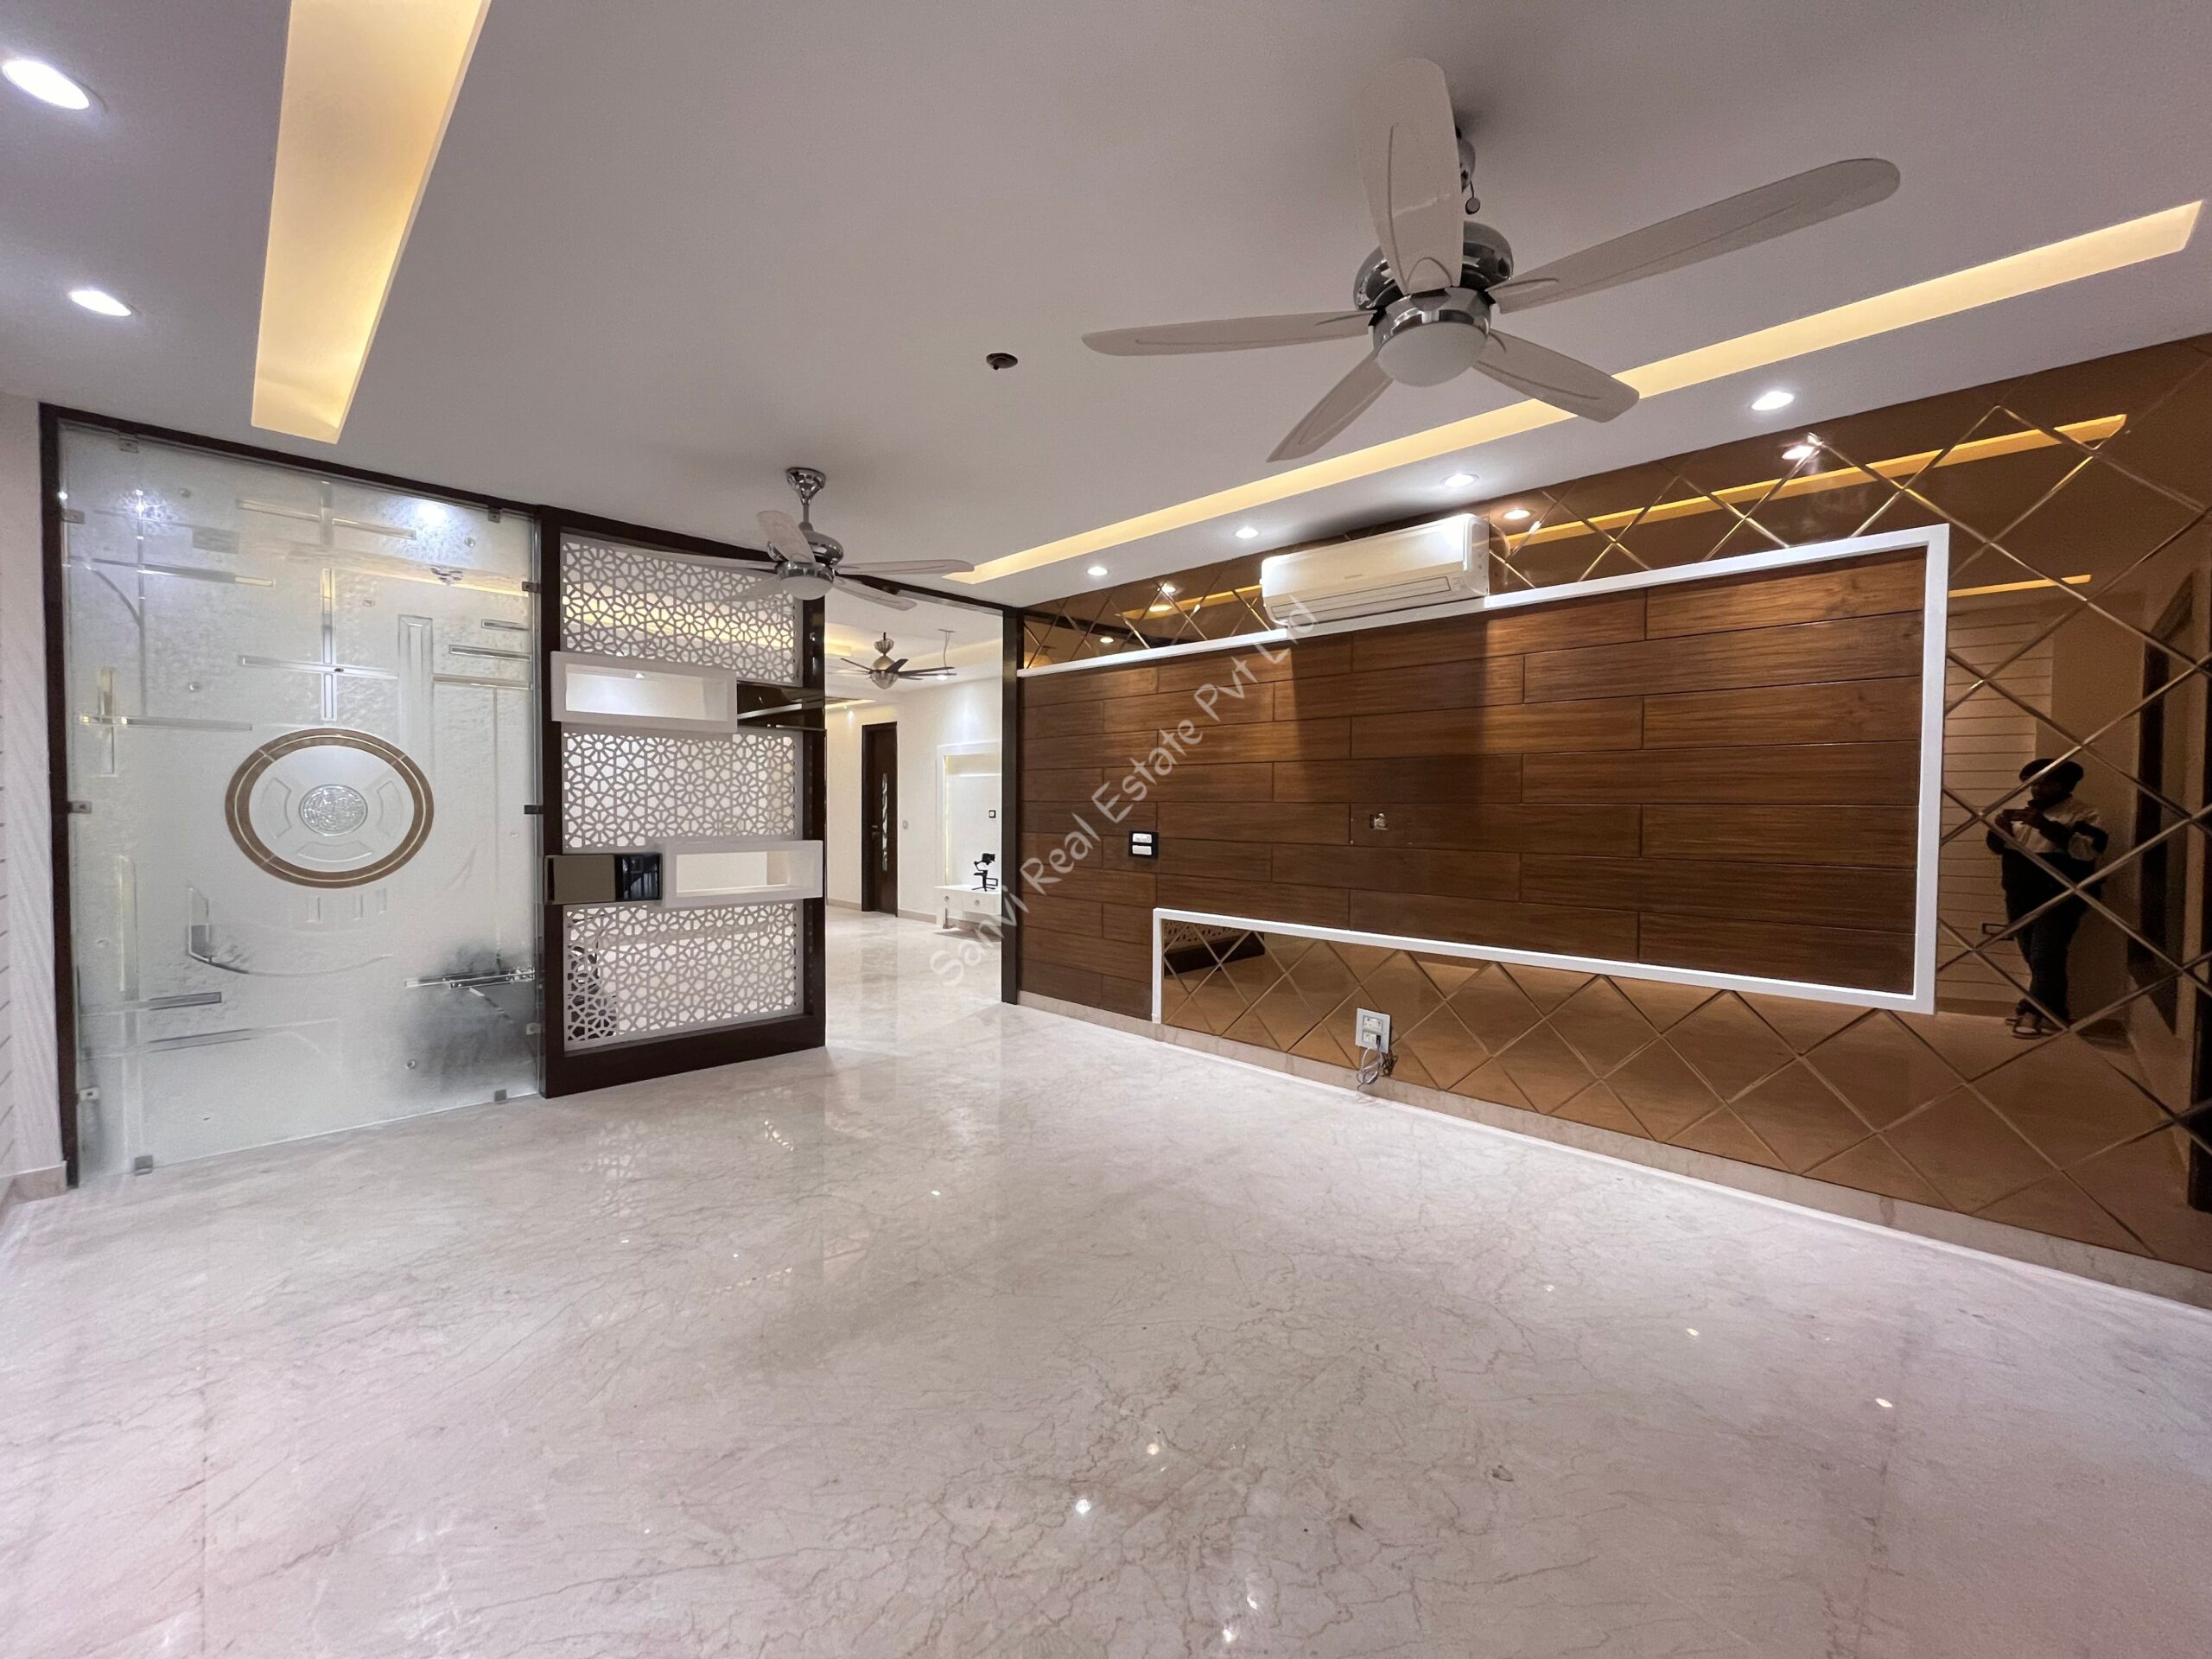 4 BHK Ultra Premium Property in Paschim Vihar, Delhi | M-Sanvi Real Estate |Flats in Delhi